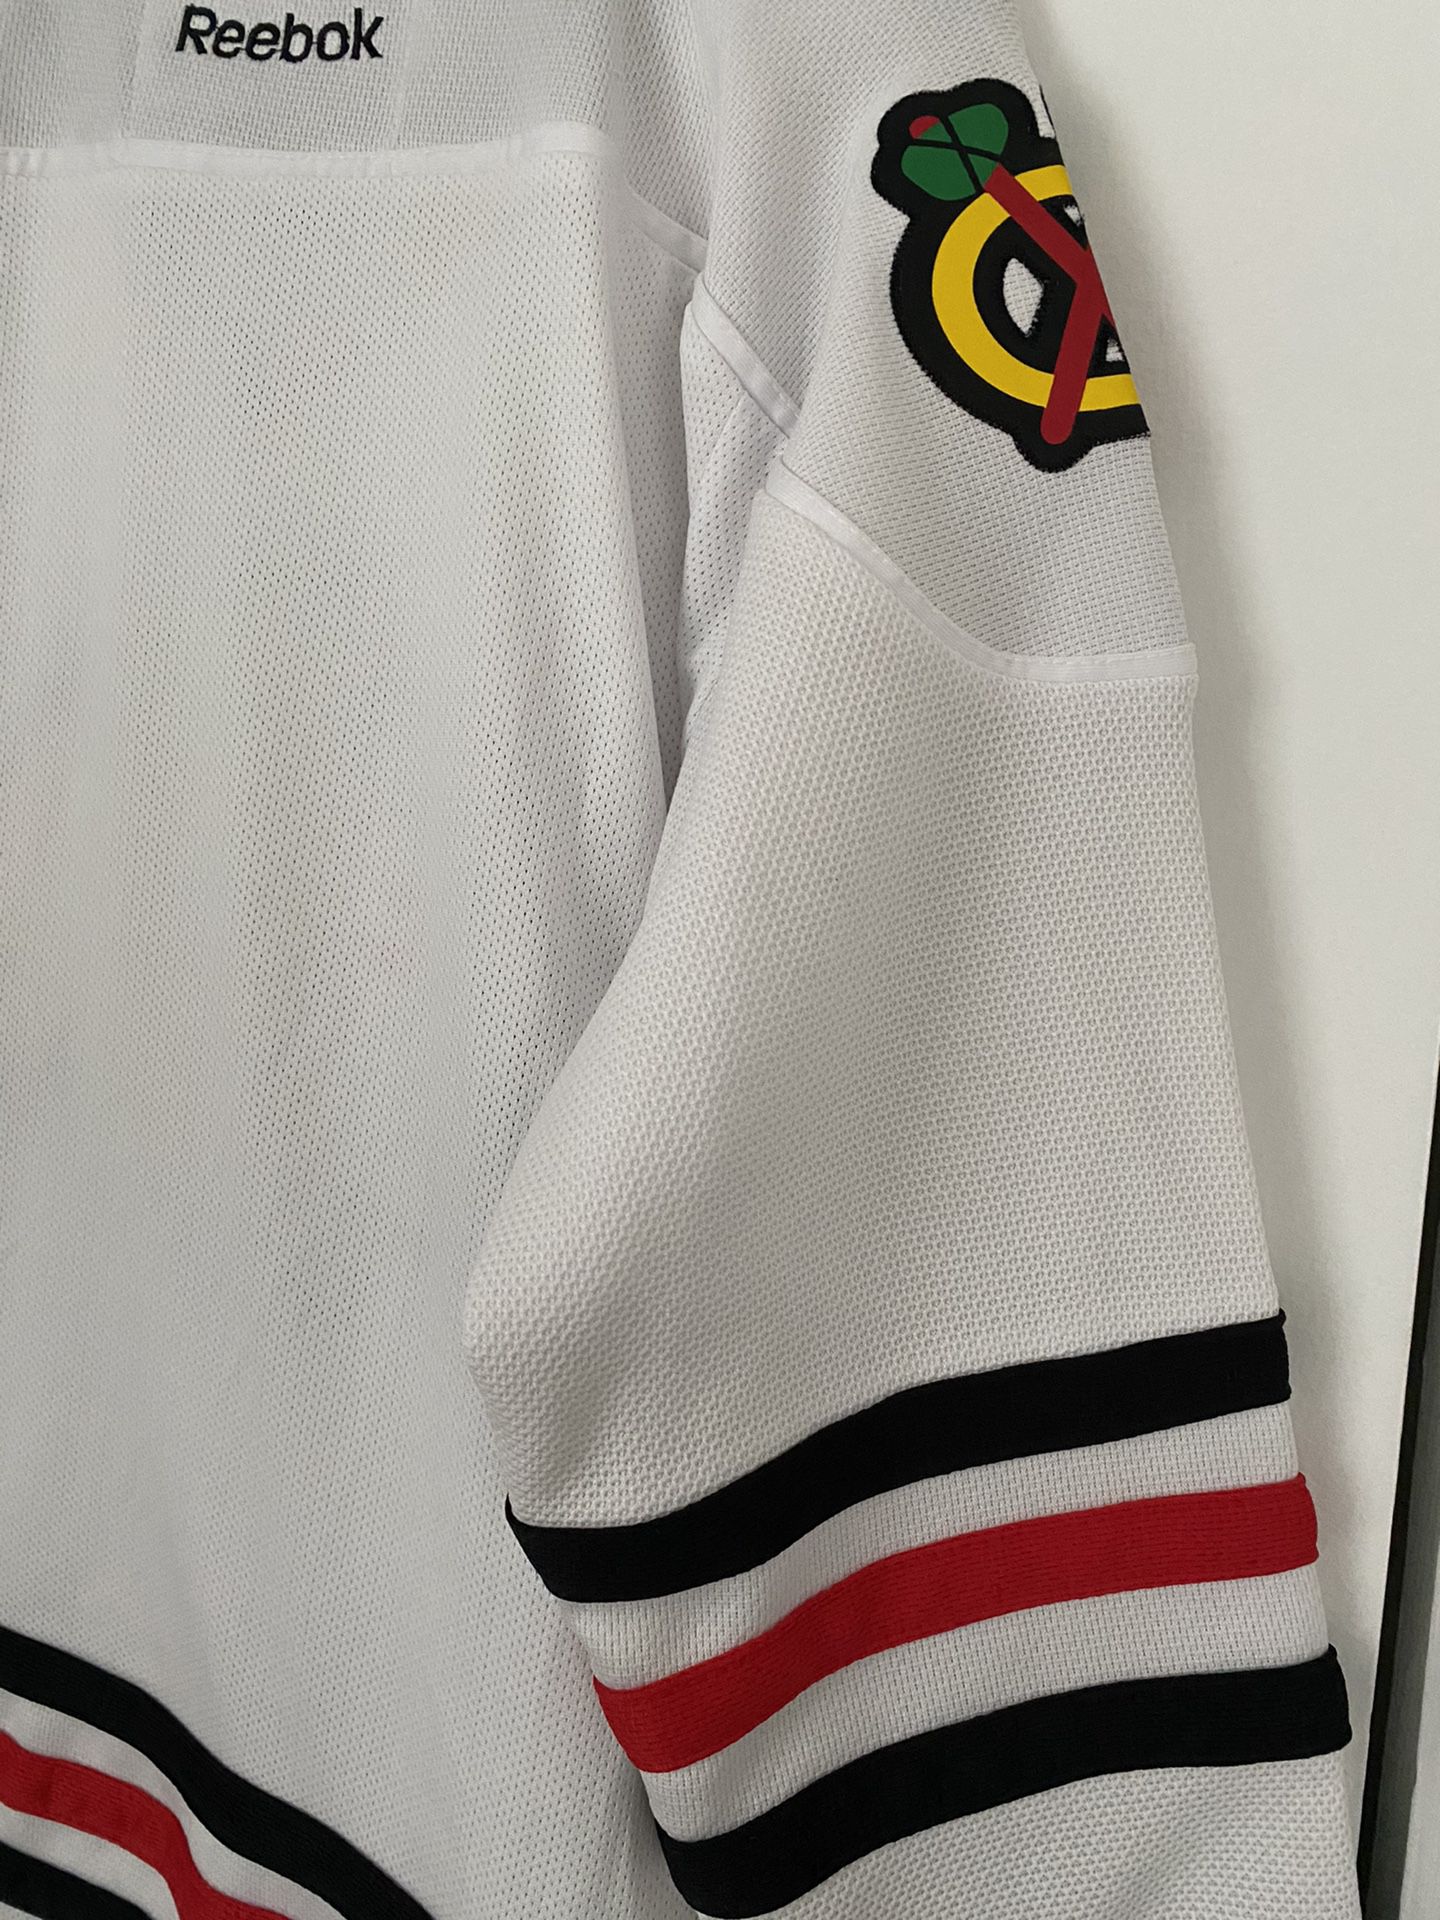 NHL Chicago blackhawks hockey Jersey for Sale in El Paso, TX - OfferUp